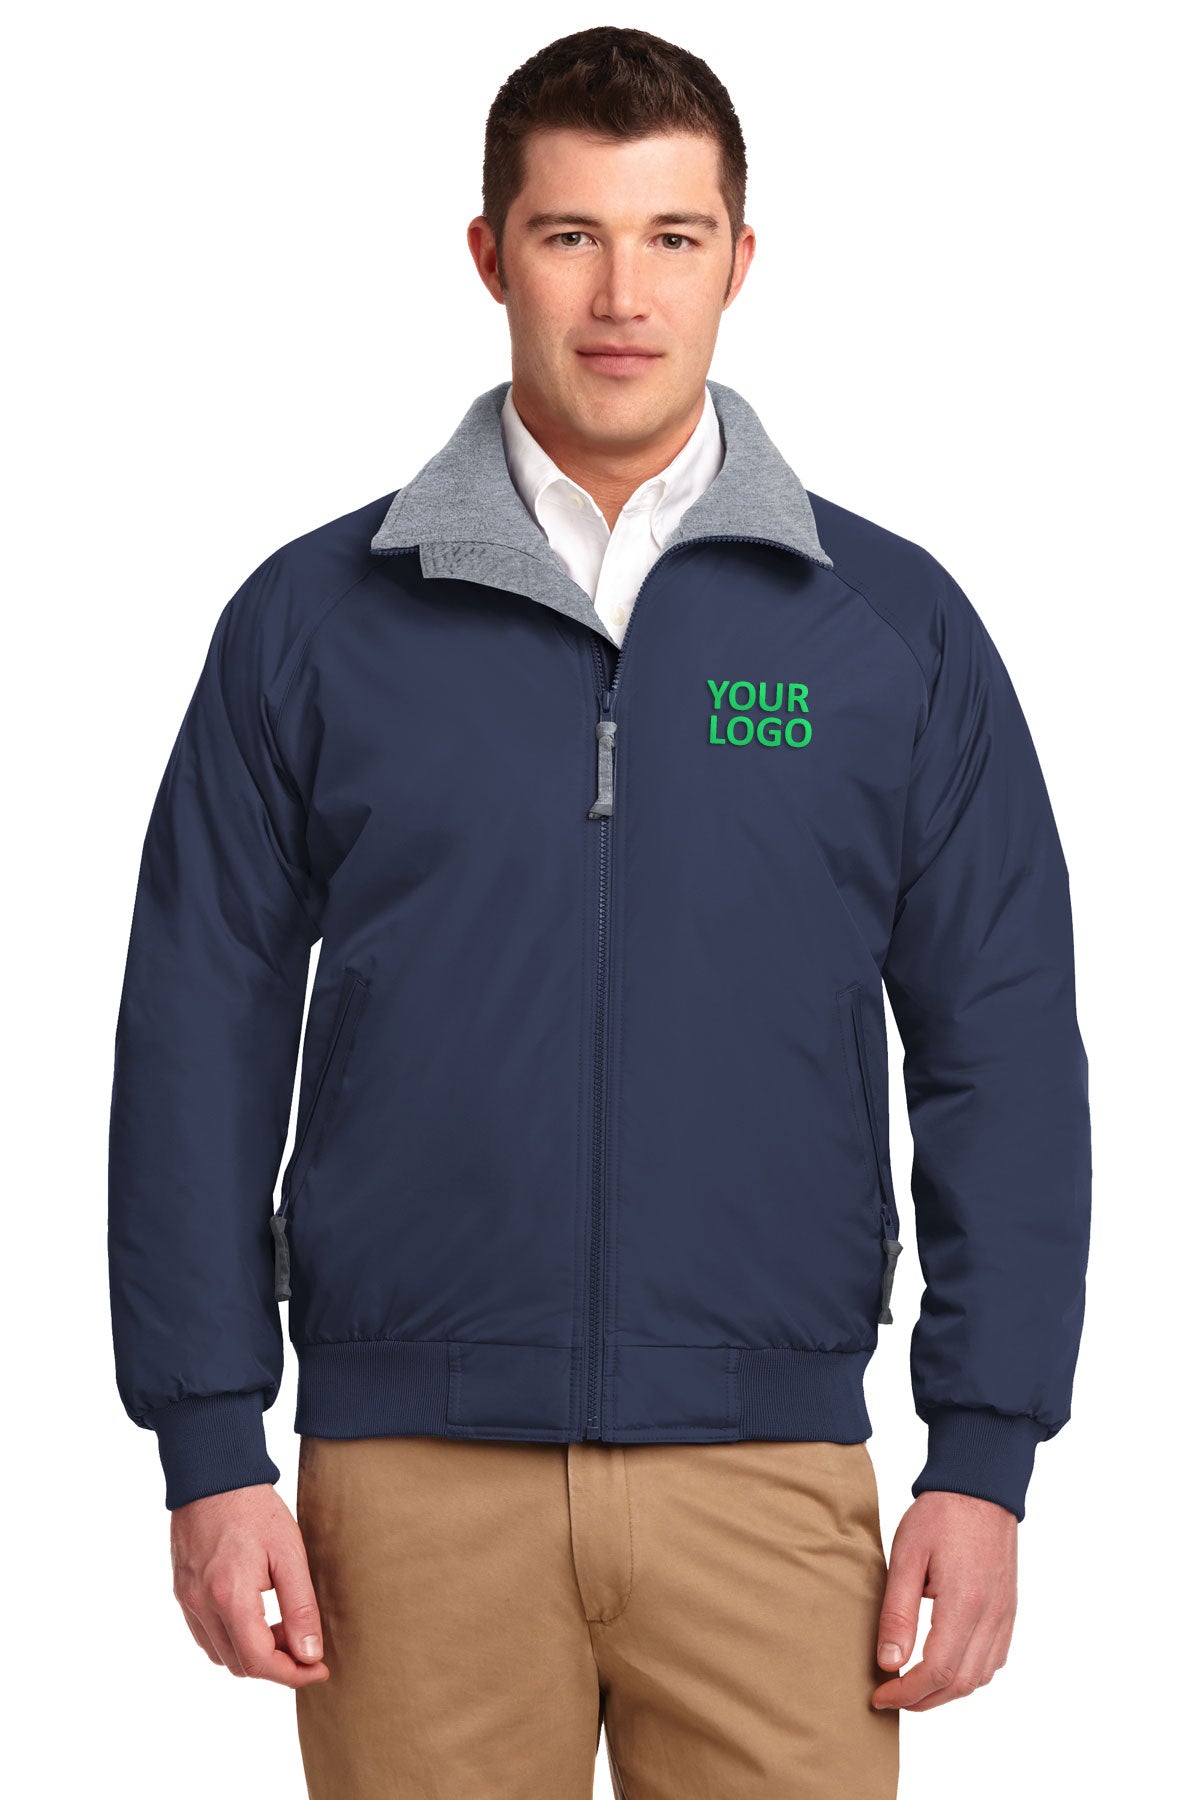 port authority true navy/ grey heather tlj754 promotional jackets company logo